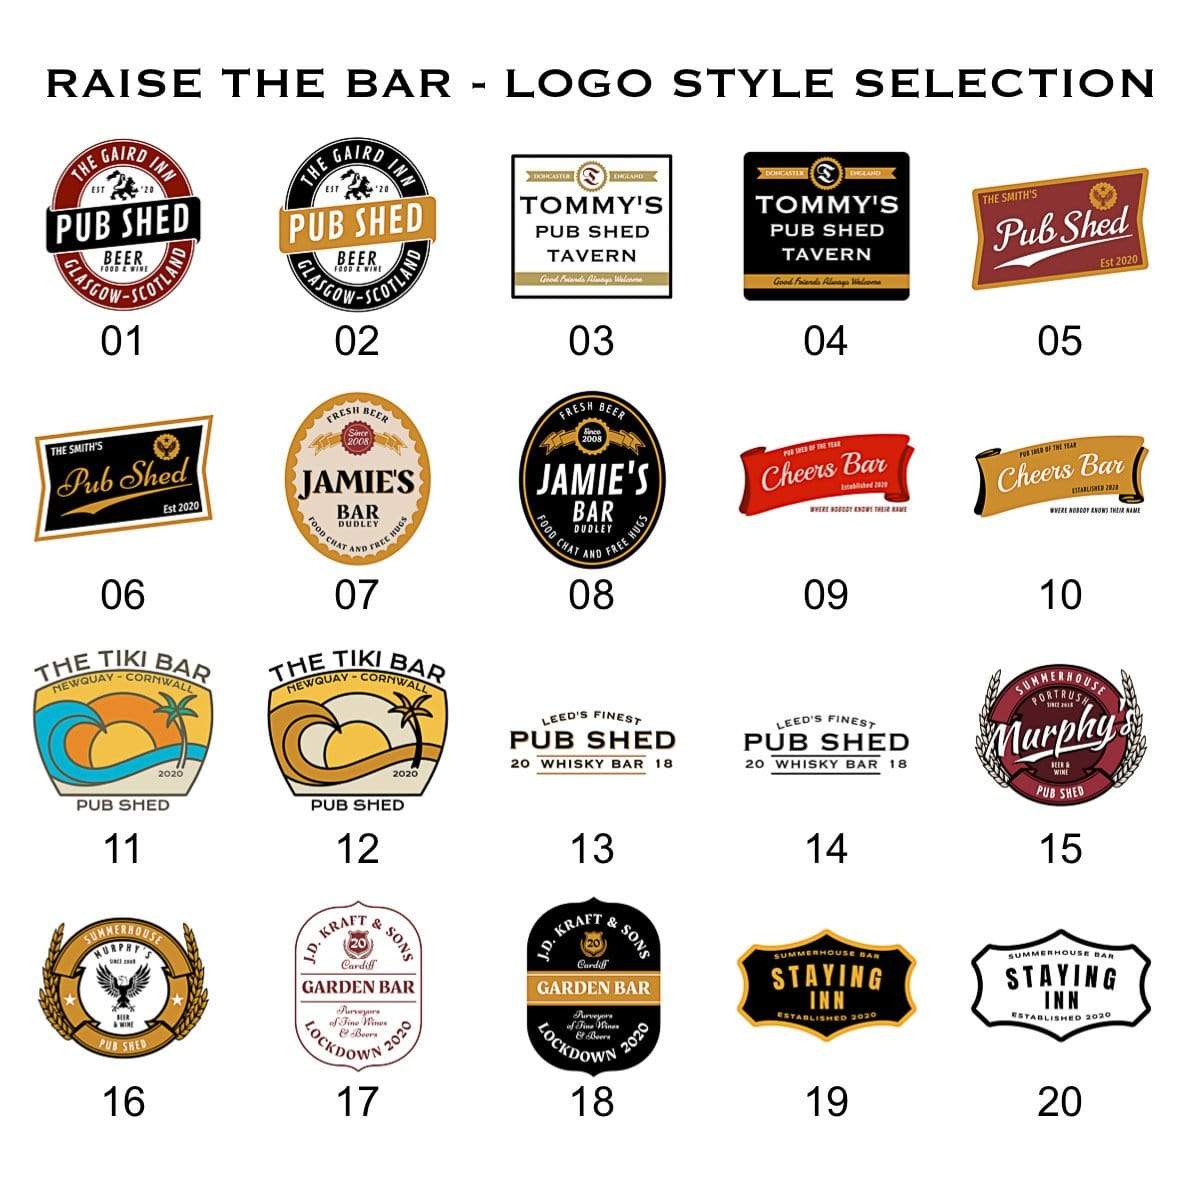 Pub Shed Branding Kit #1 Raise the Bar Print and Design - Raise the Bar